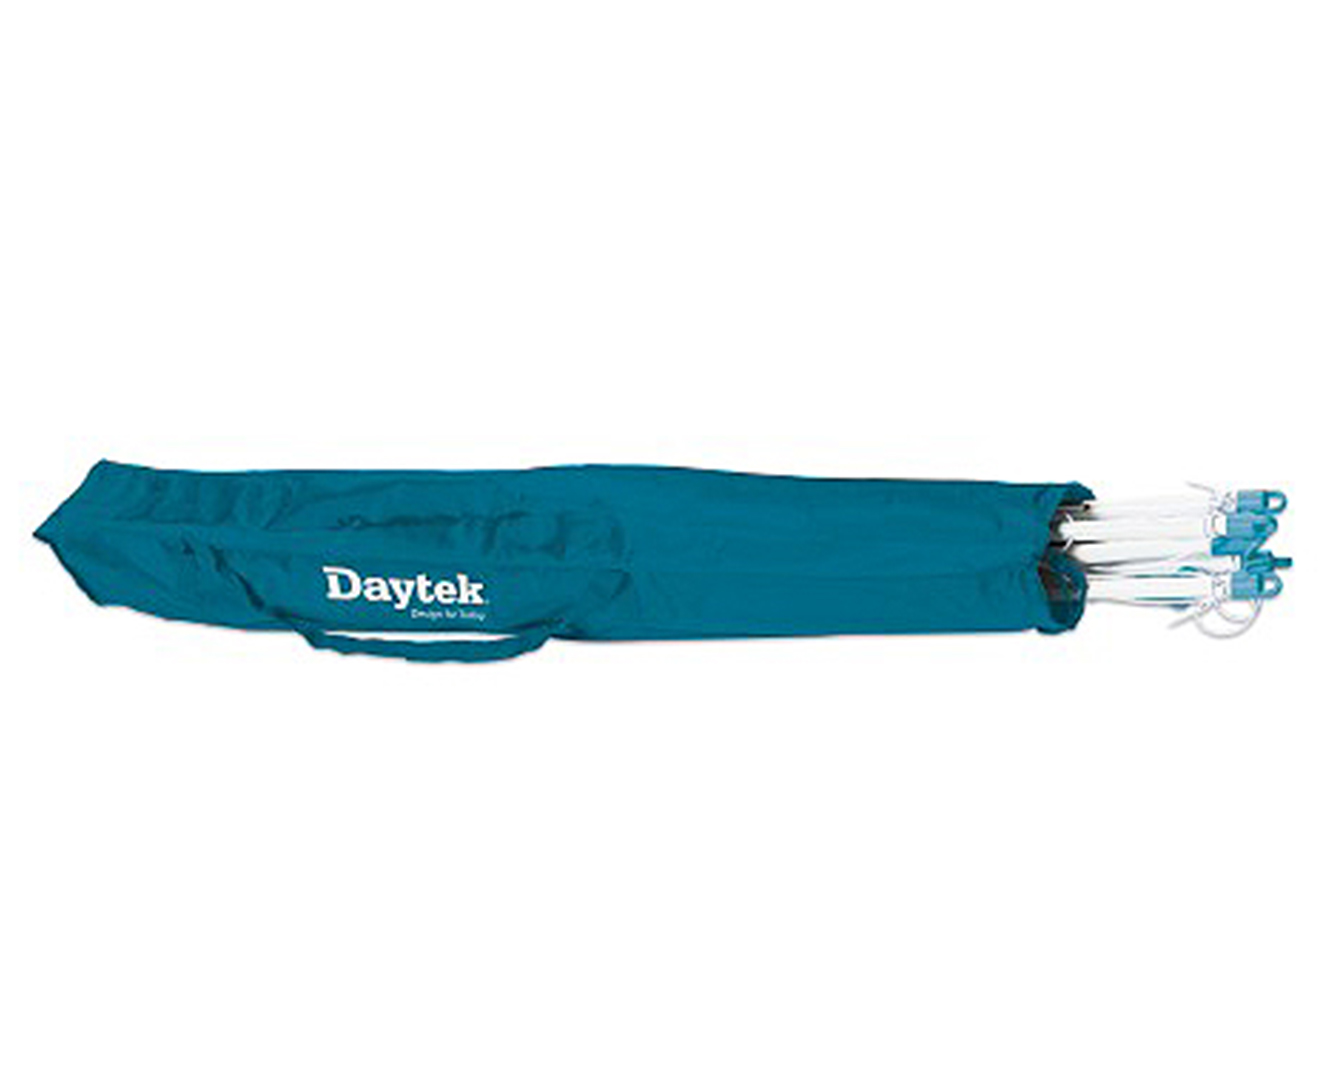 Daytek Portable Camping Clothesline & Reviews